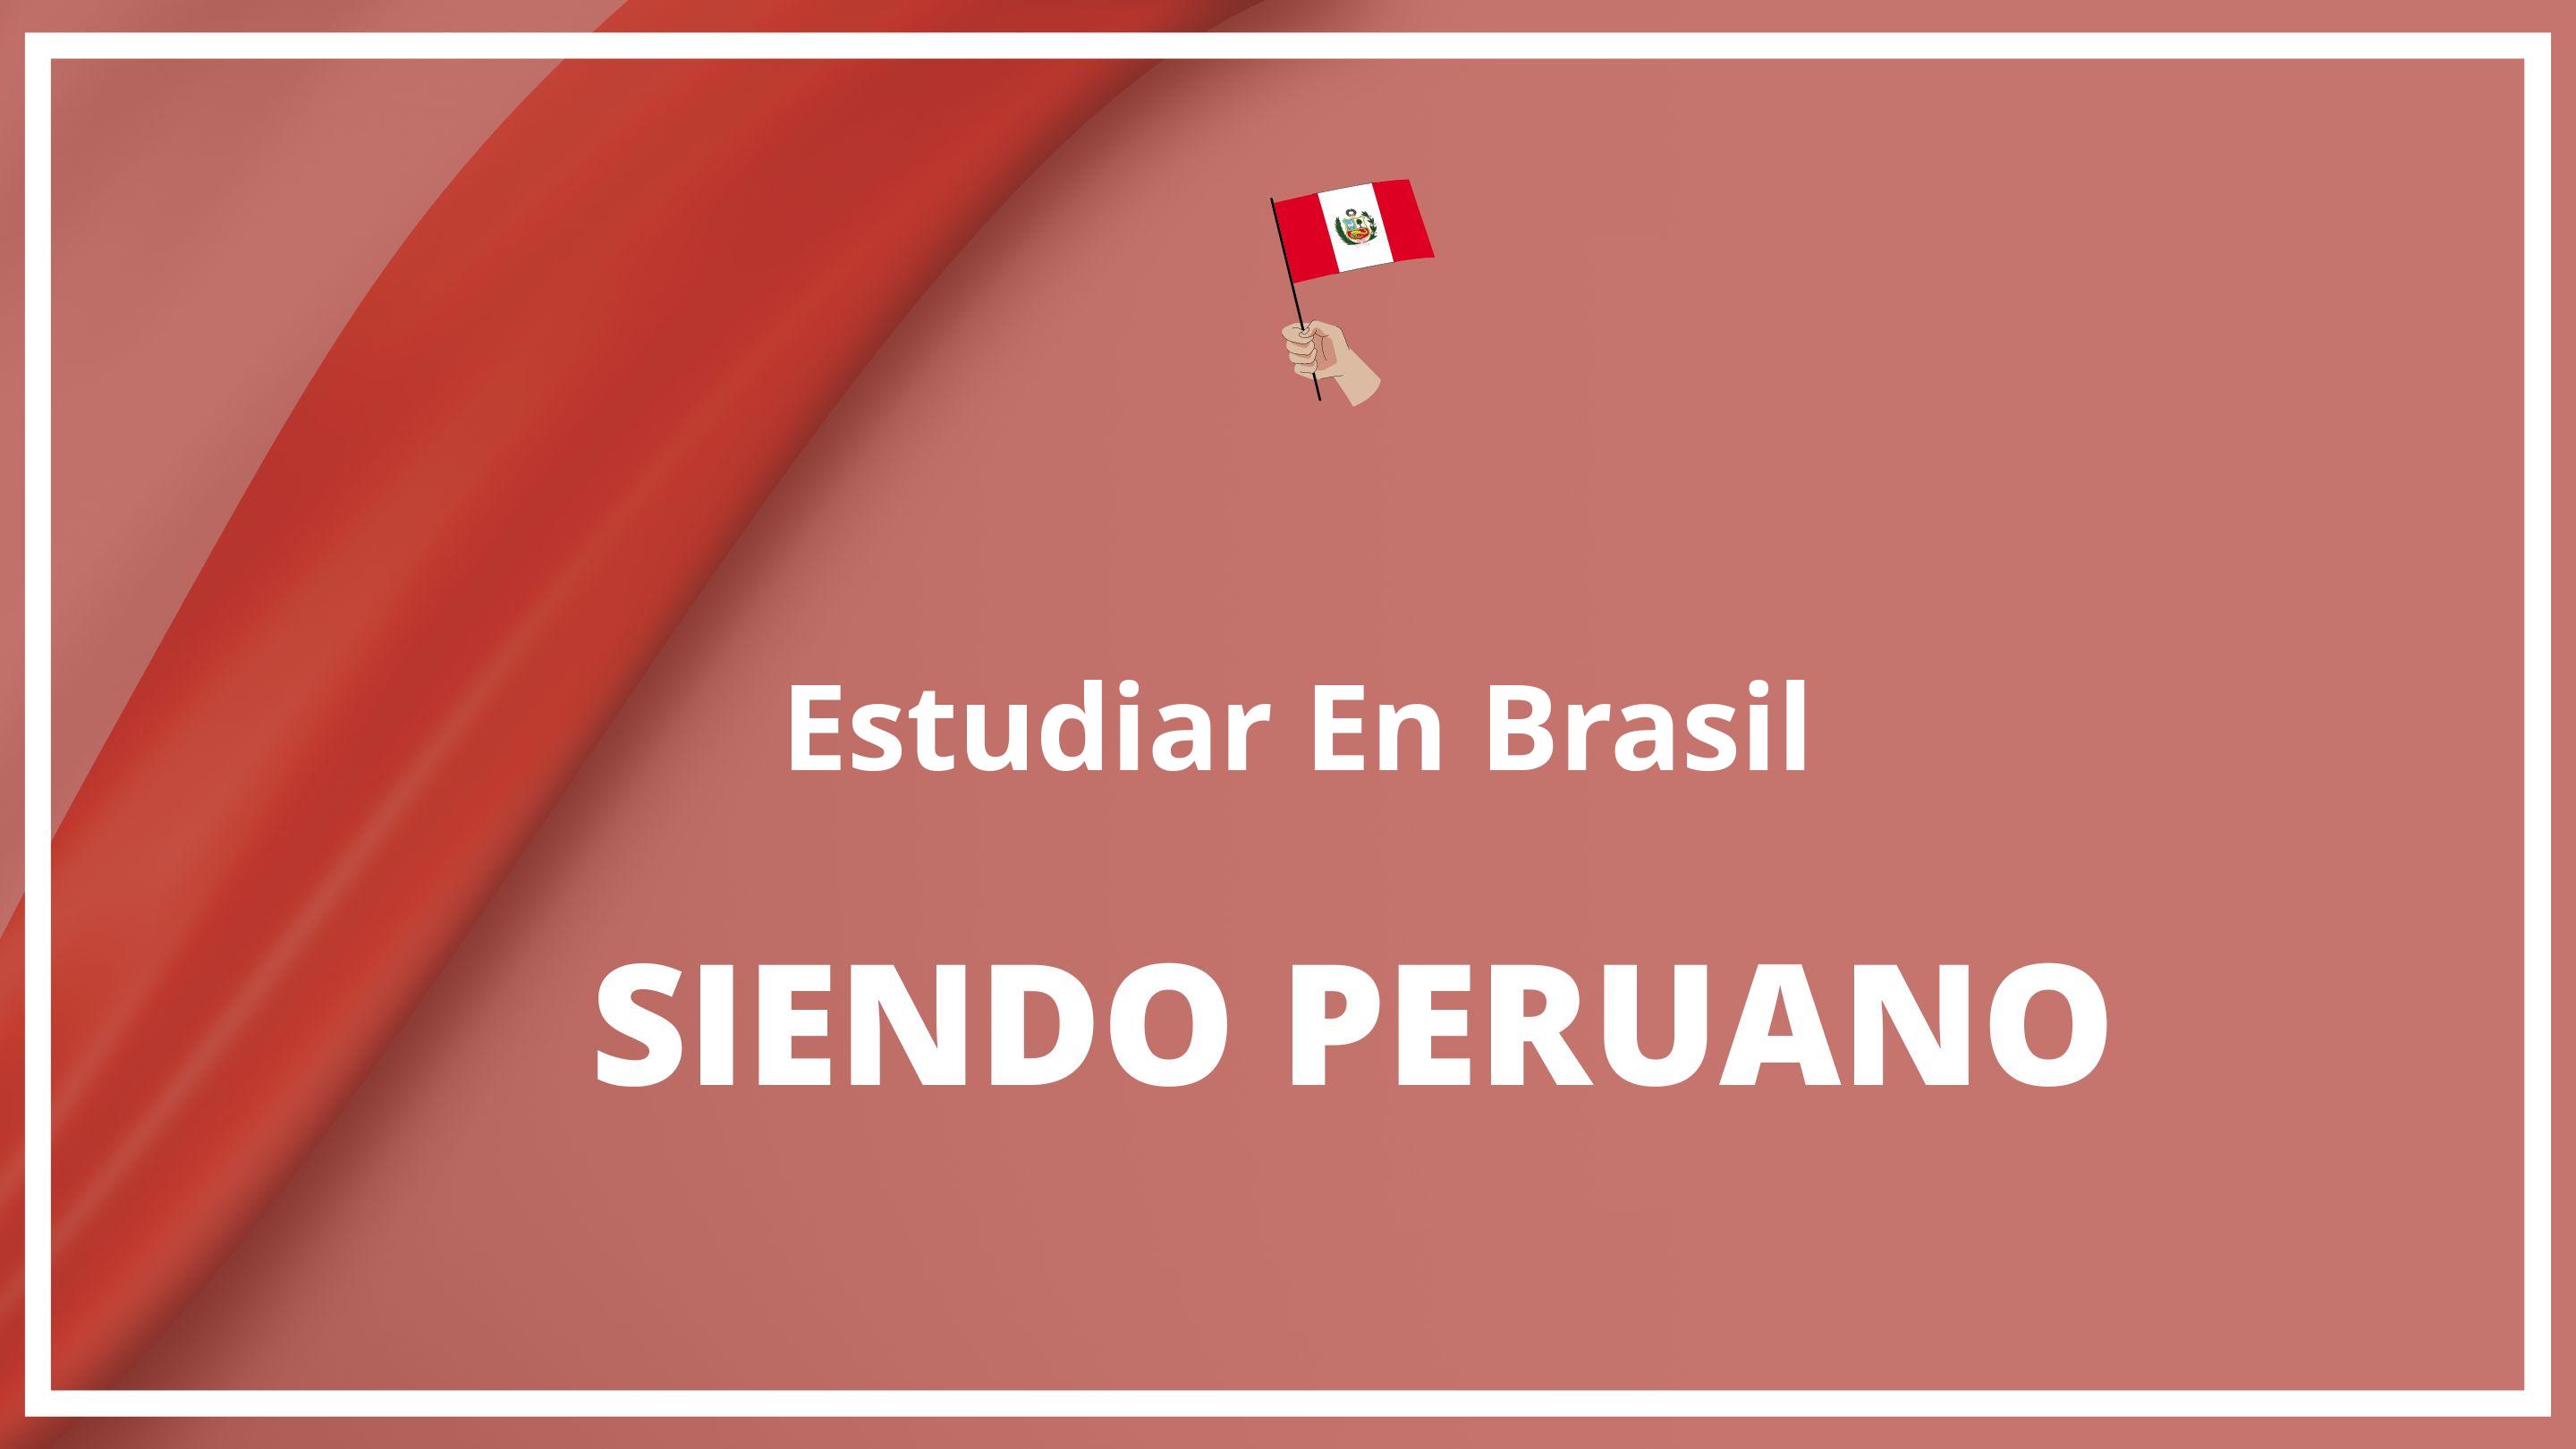 Como estudiar en brasil siendo peruano